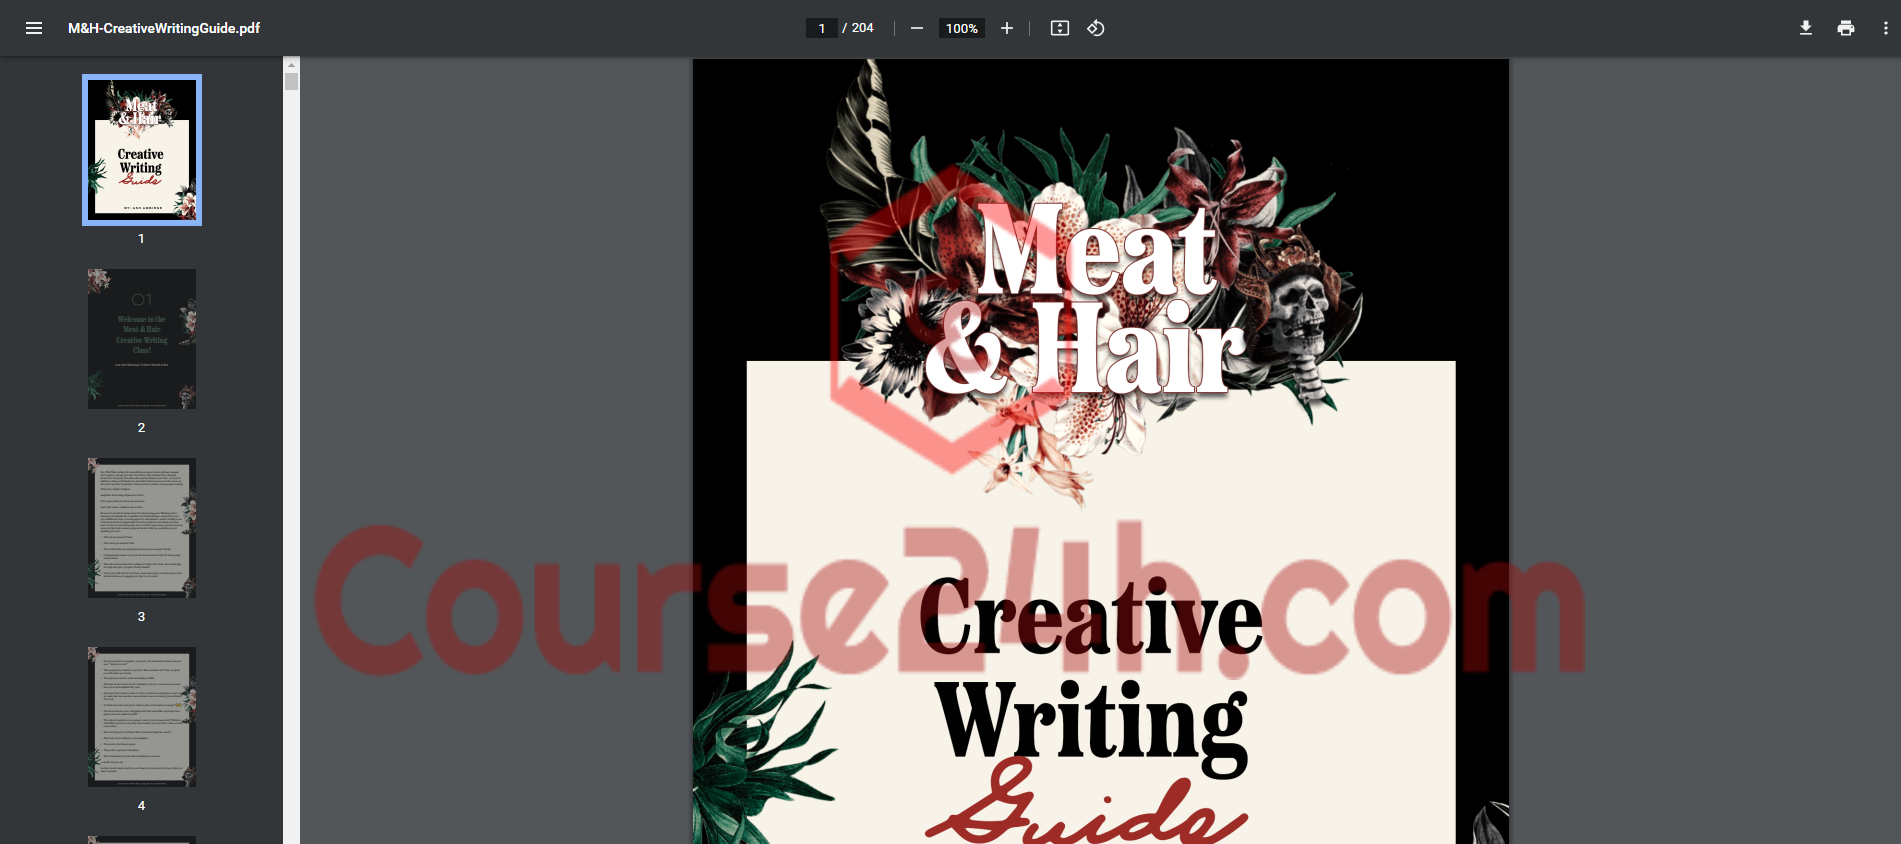 The Creative Writing Class — Meat & Hair